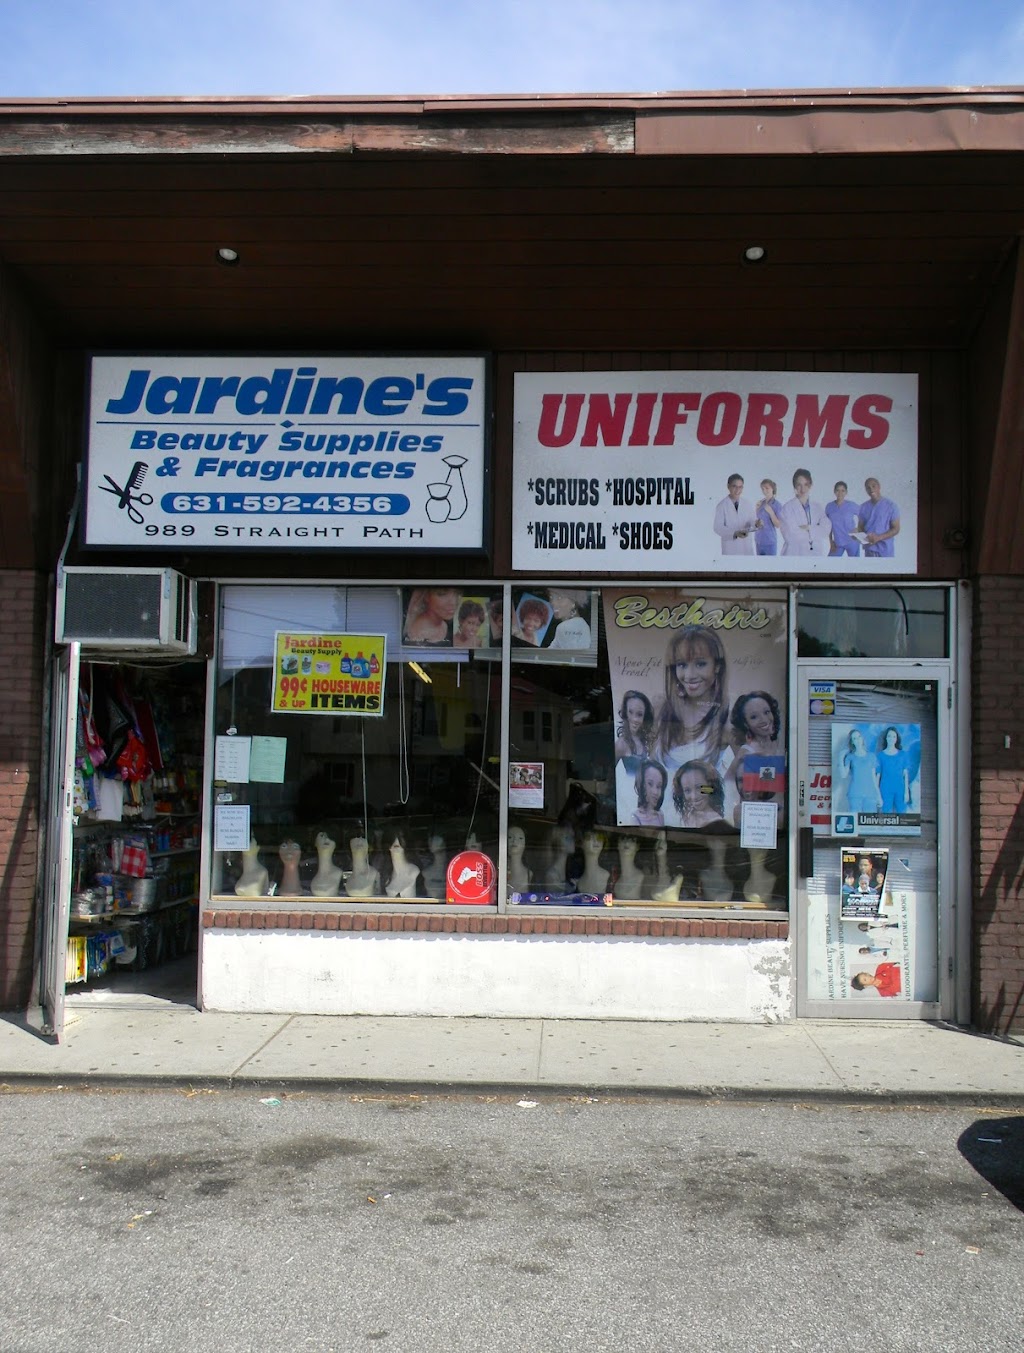 Jardines Beauty Supply & Frgrnc | 989 Straight Path, West Babylon, NY 11704 | Phone: (631) 592-4356